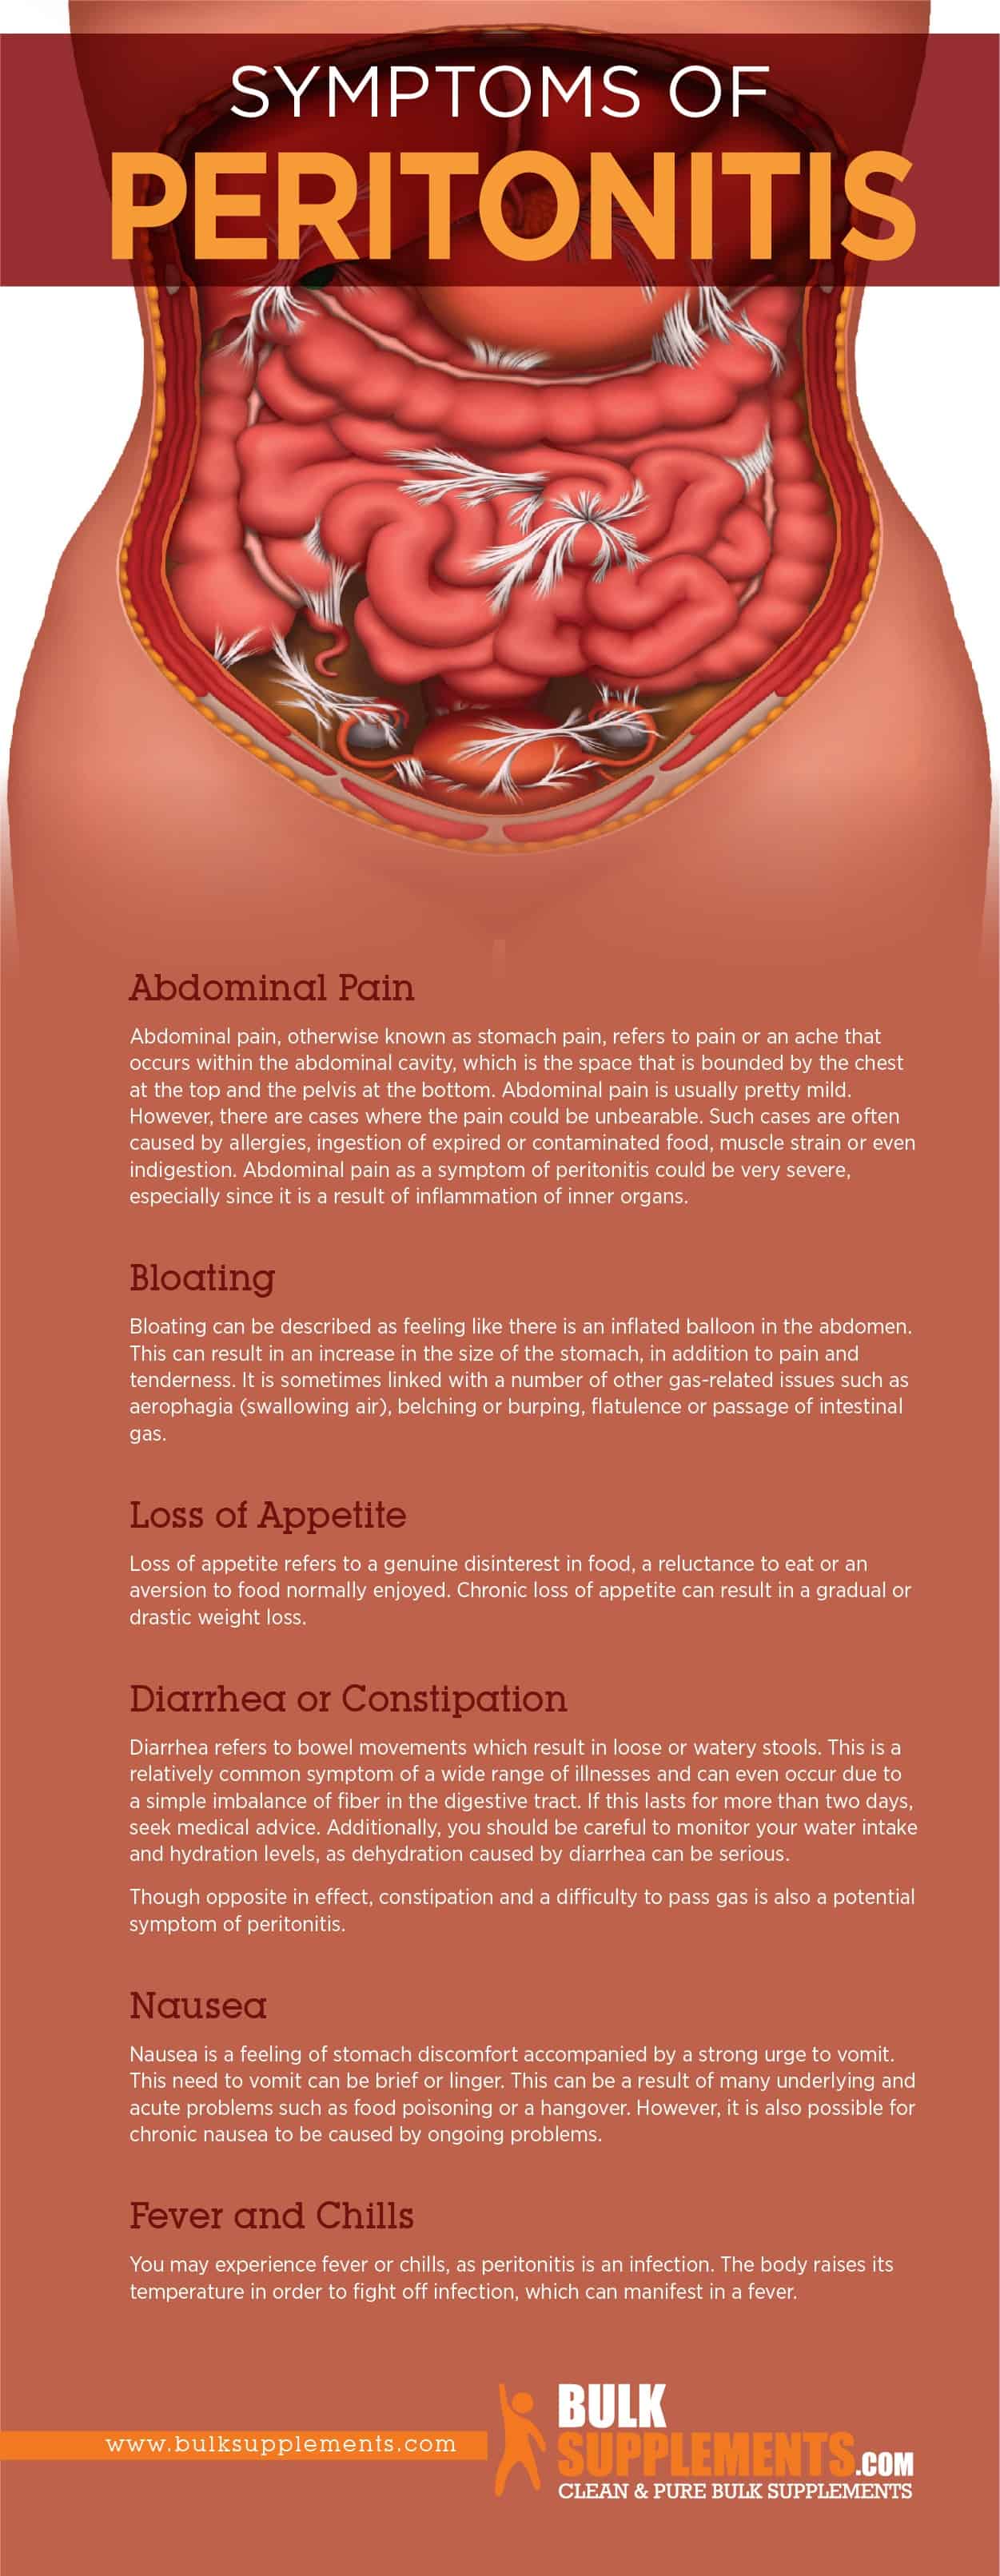 Symptoms of Peritonitis